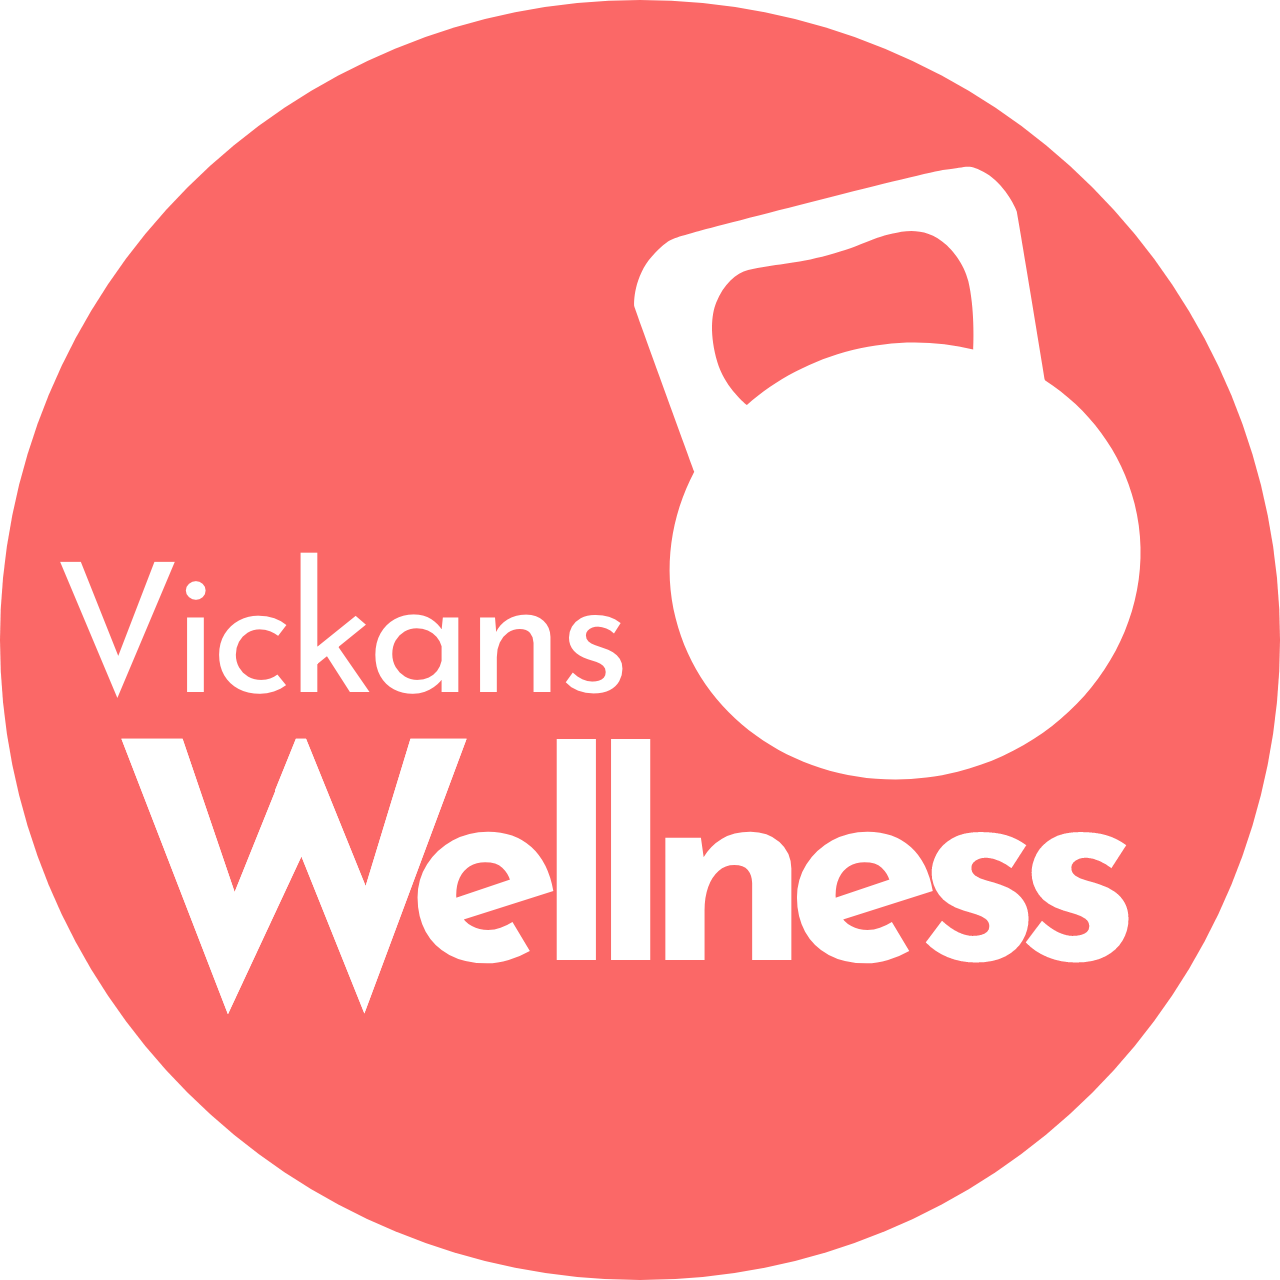 Vickans Wellness